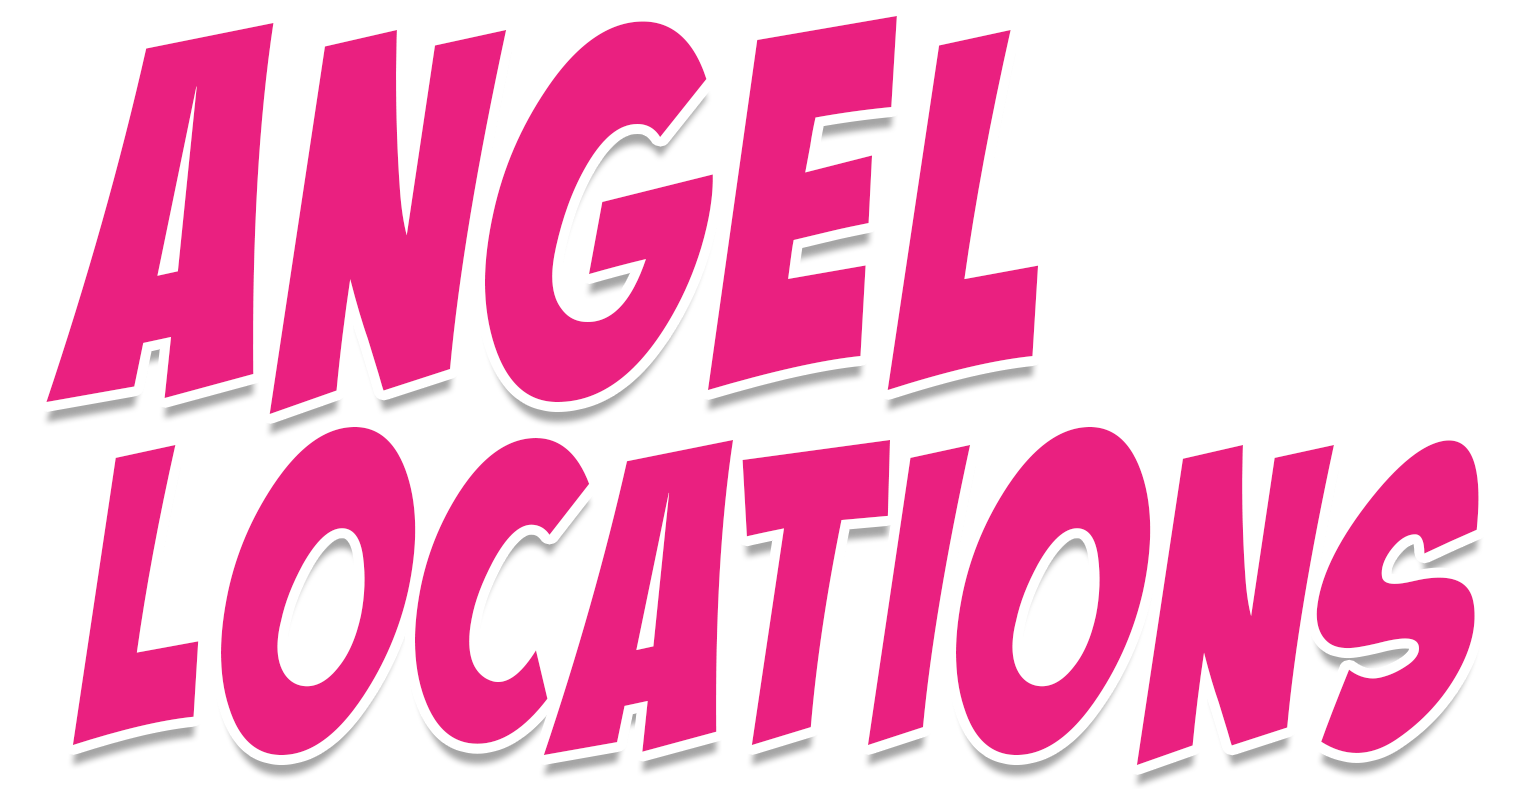 AA-tangel-locations-text